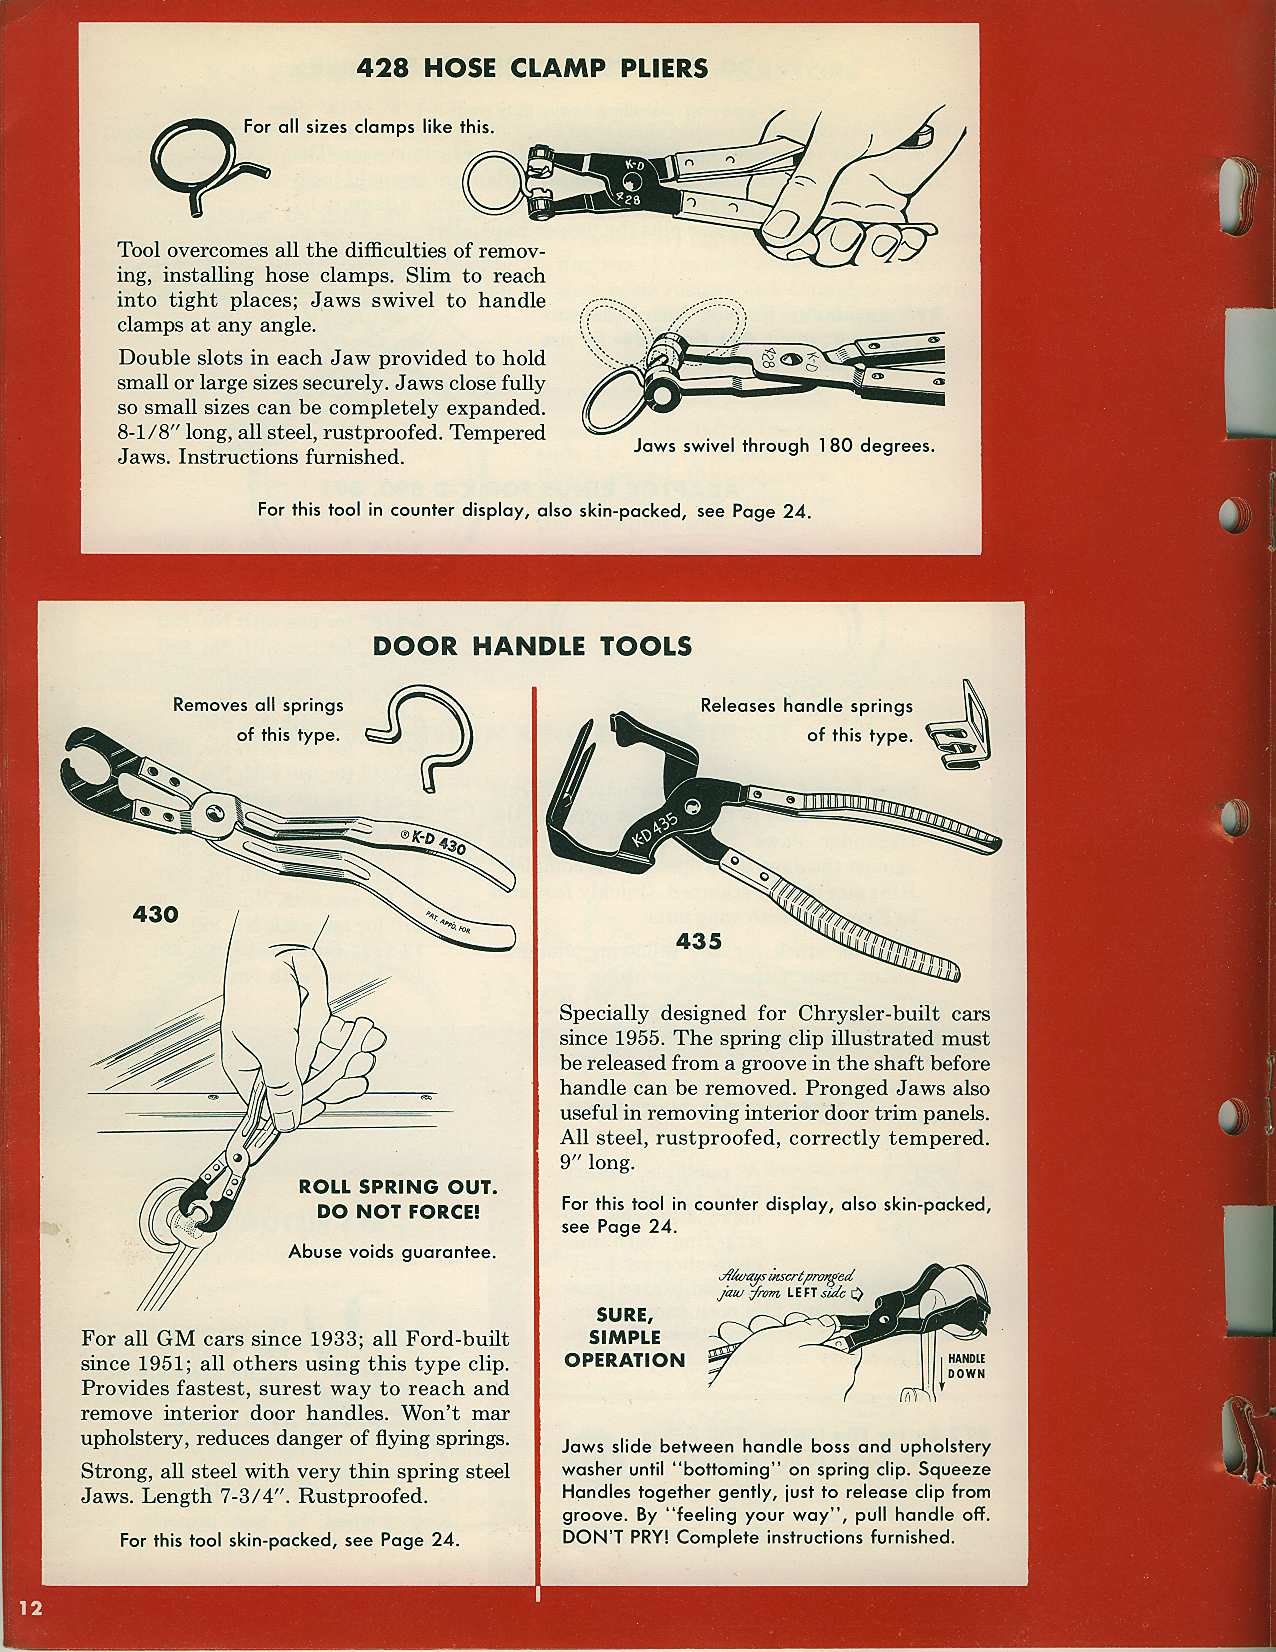 TheSamba.com :: VW Archives - February, 1959 K-D Tools Catalog and ...